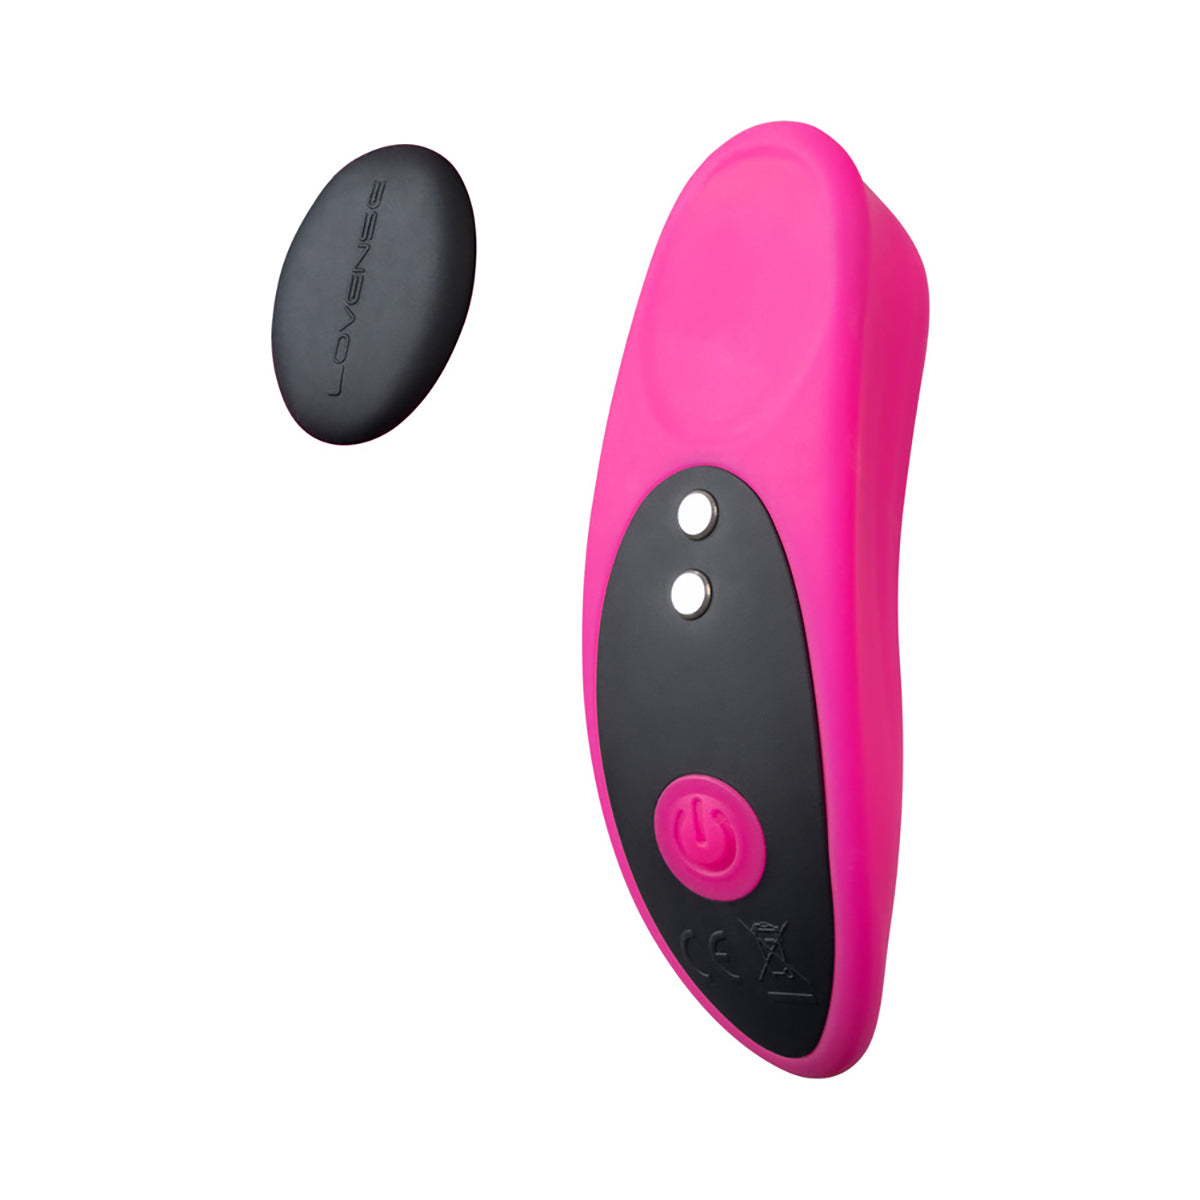 Lovense Ferri Bluetooth Remote-Controlled Panty Vibrator - Zateo Joy